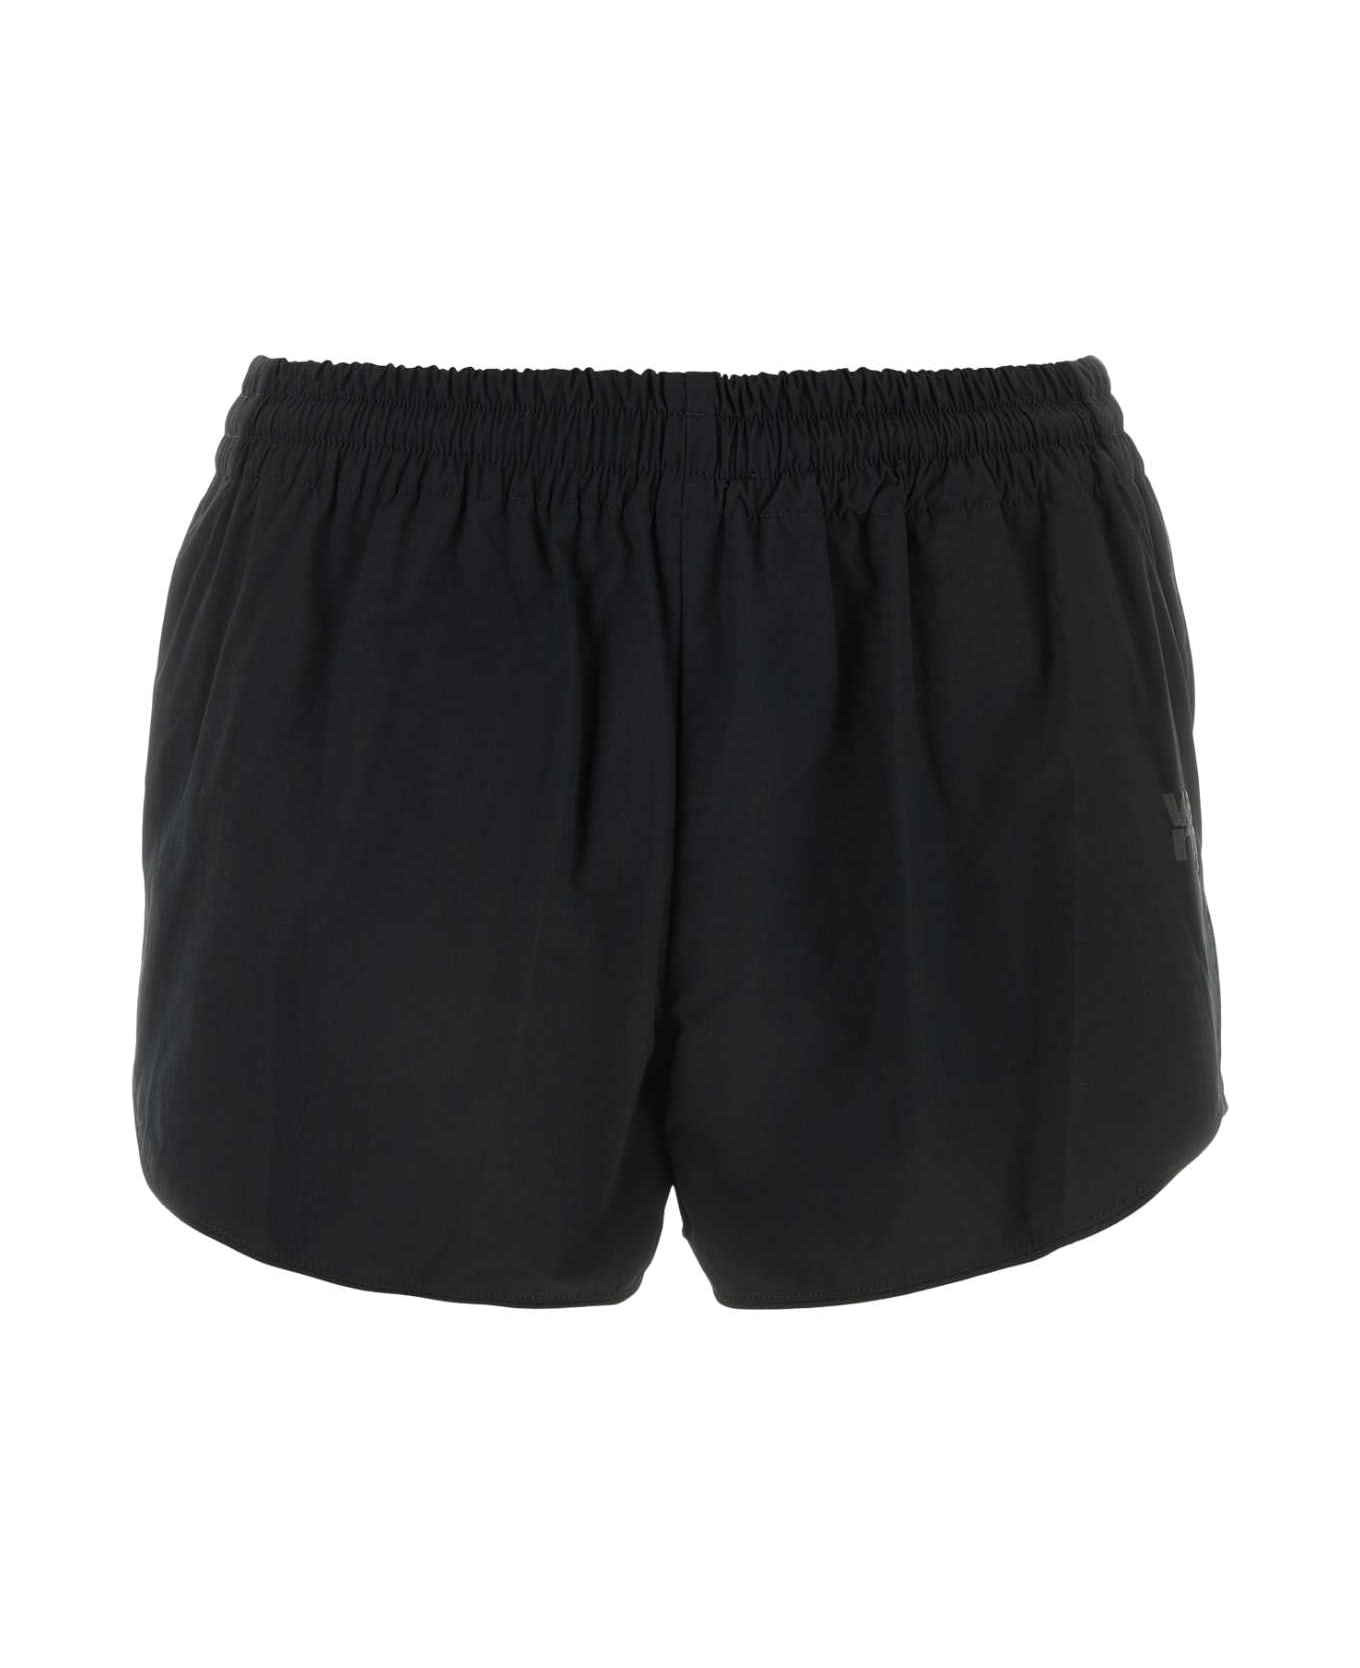 T by Alexander Wang Black Polyester Blend Shorts - Black